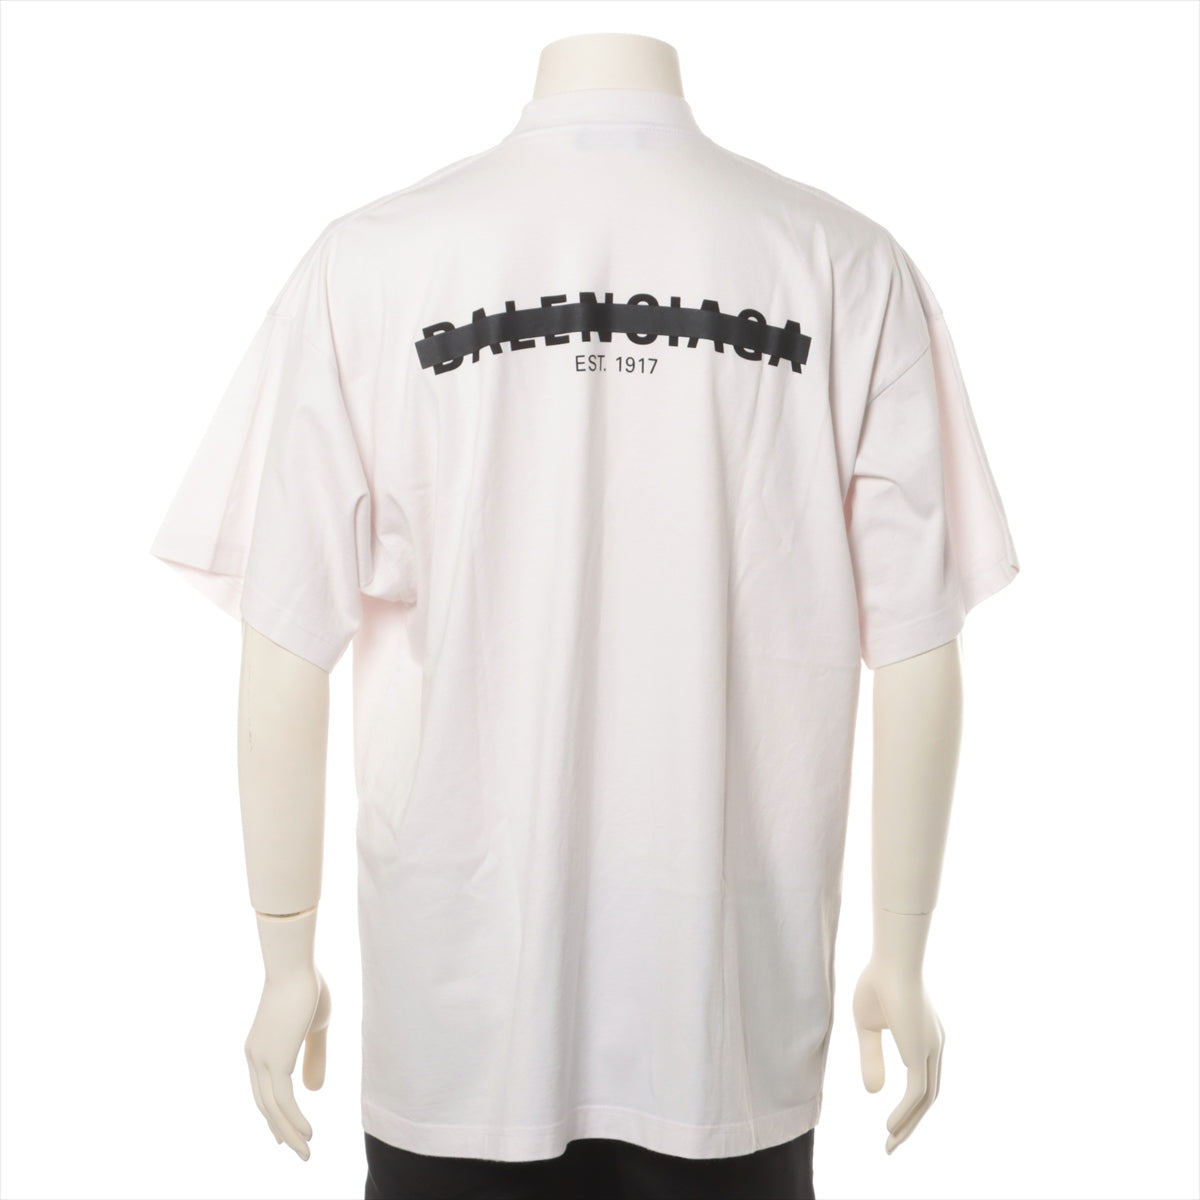 Balenciaga 22 years Cotton T-shirt L Men's Pink  694576